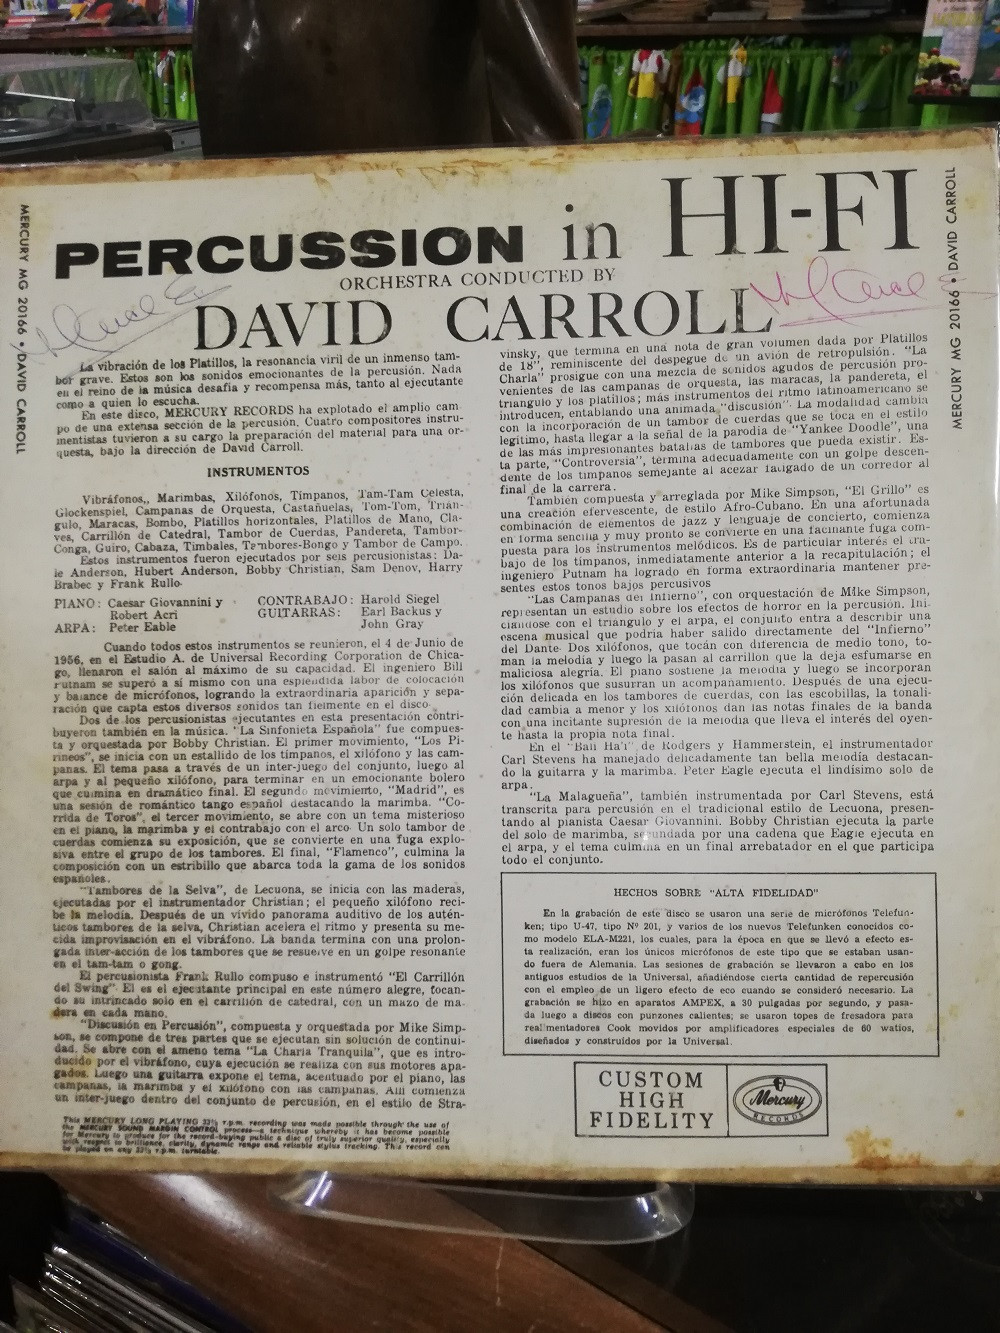 Imagen LP DAVID CARROLL & ORCHESTRA - PERCUSSION IN HI-FI 2